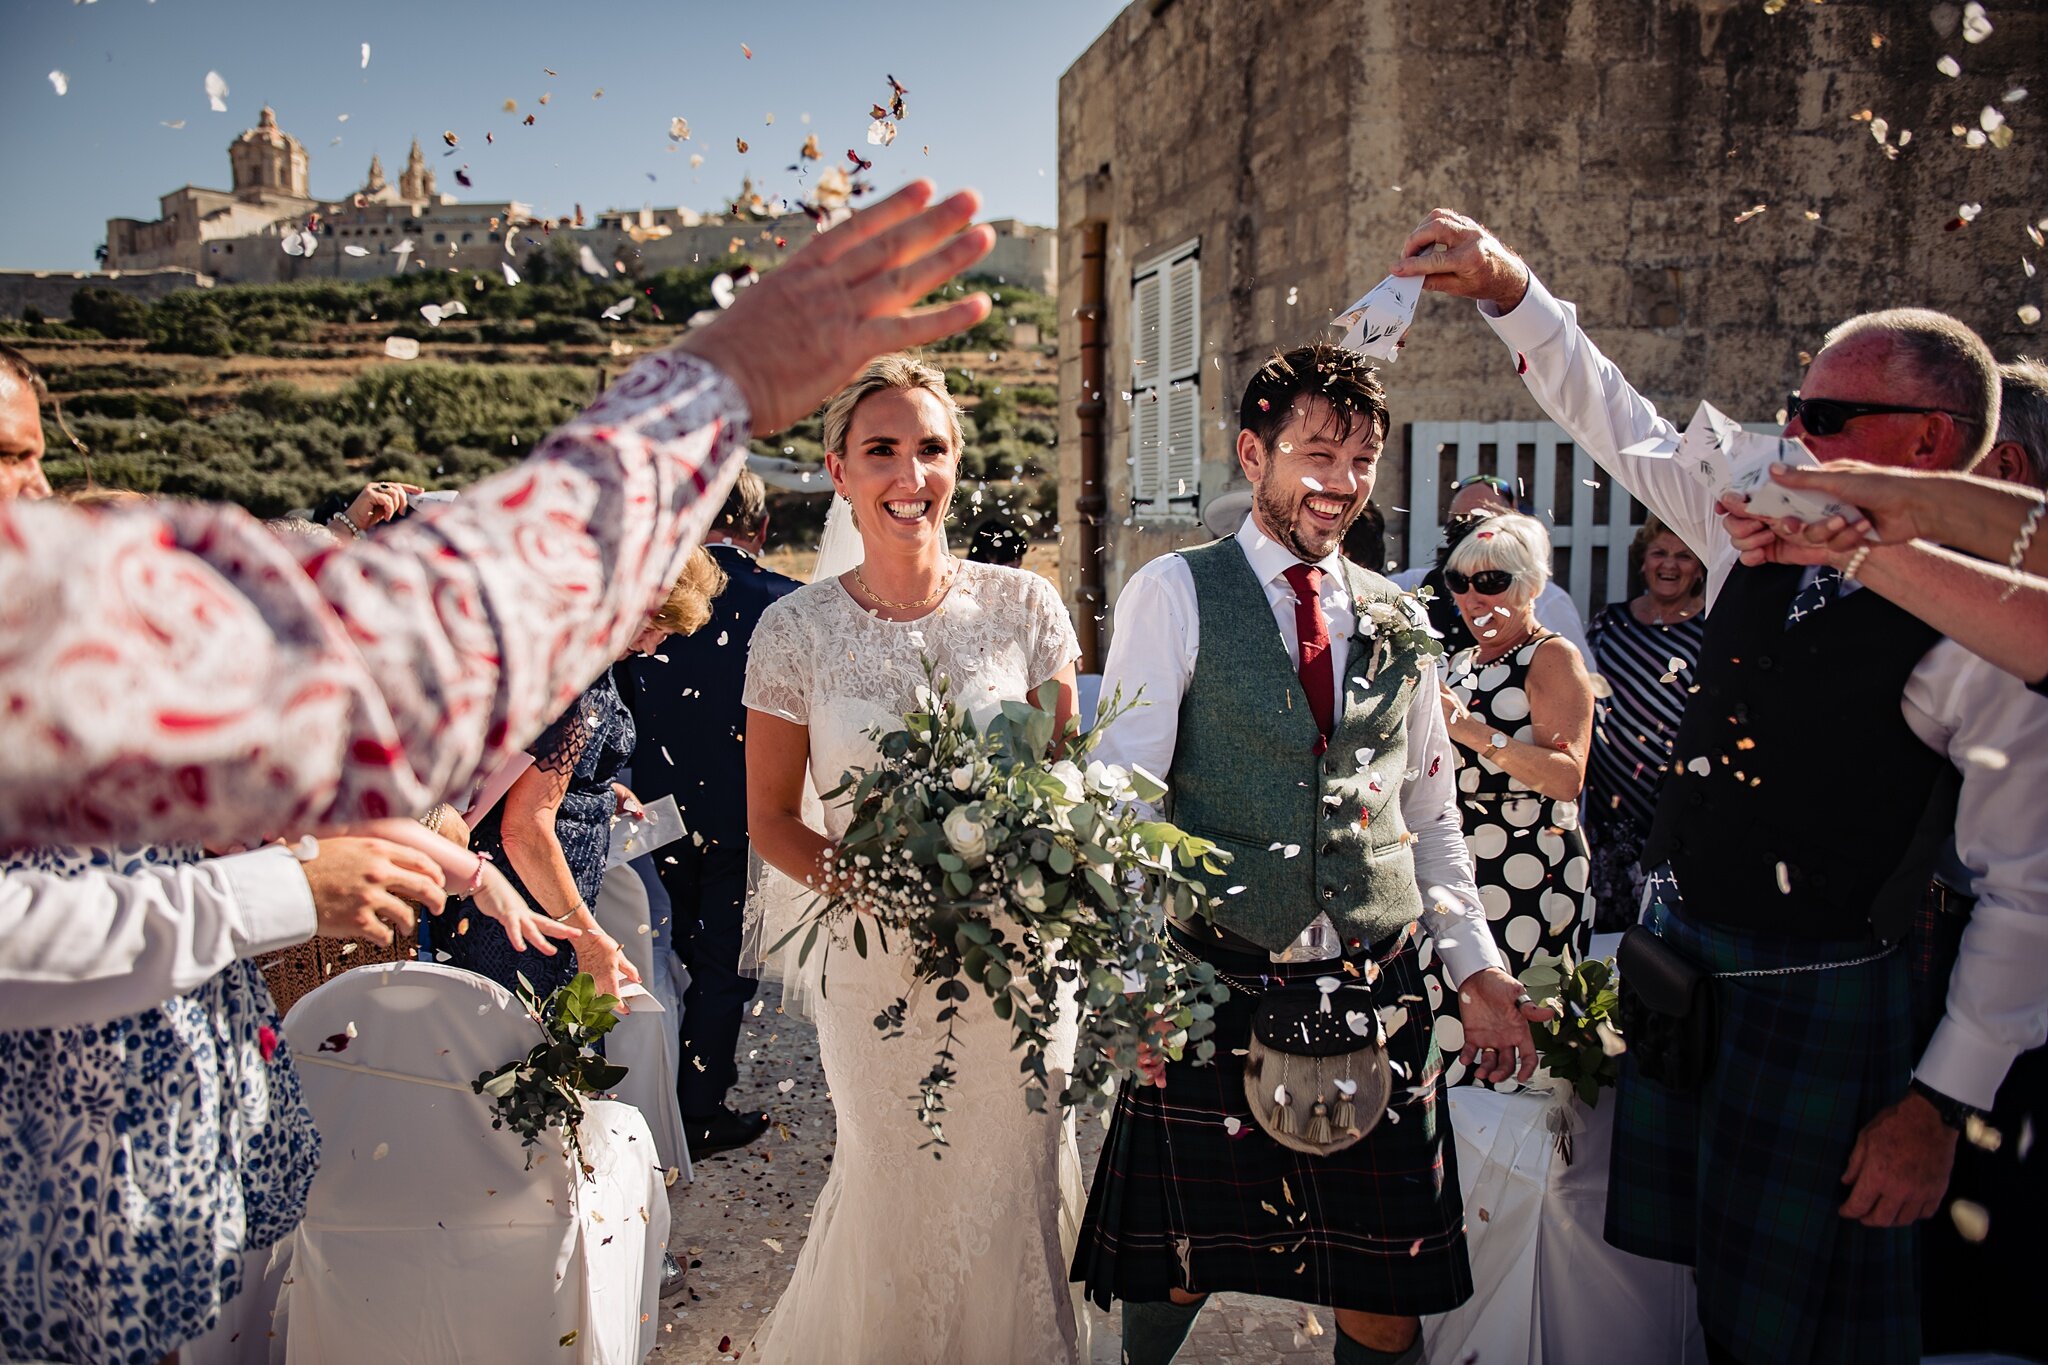 Wedding Ceremony at the Olive Gardens Mdina - Wedding Photography Malta - Shane P. Watts Photography